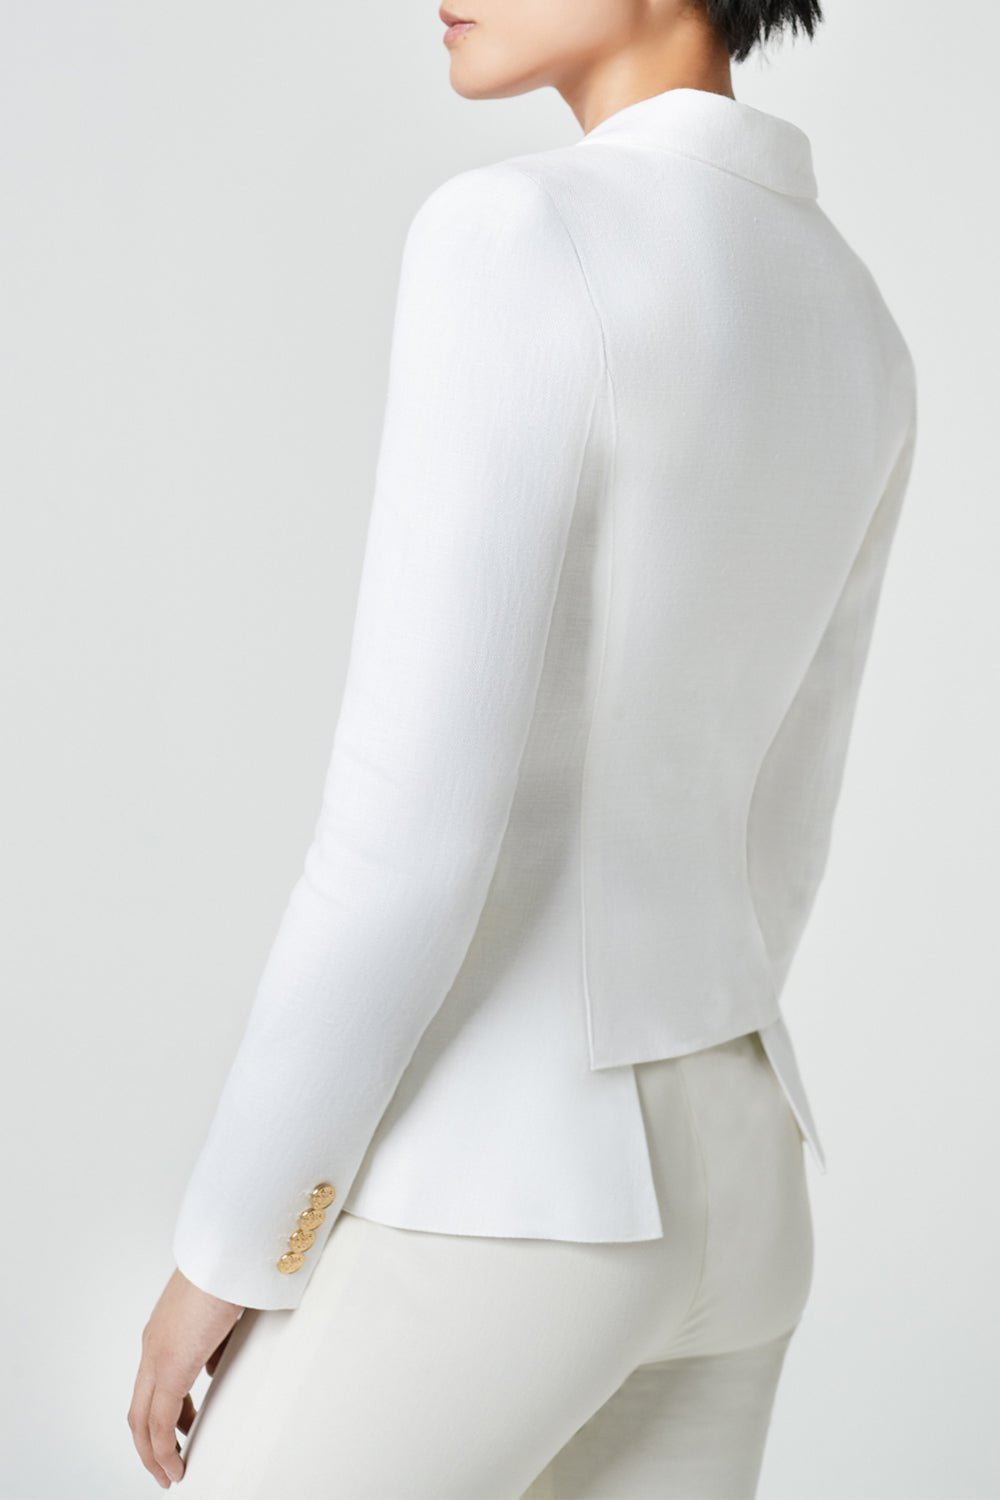 Duchess Blazer - White CLOTHINGJACKETBLAZERS SMYTHE   